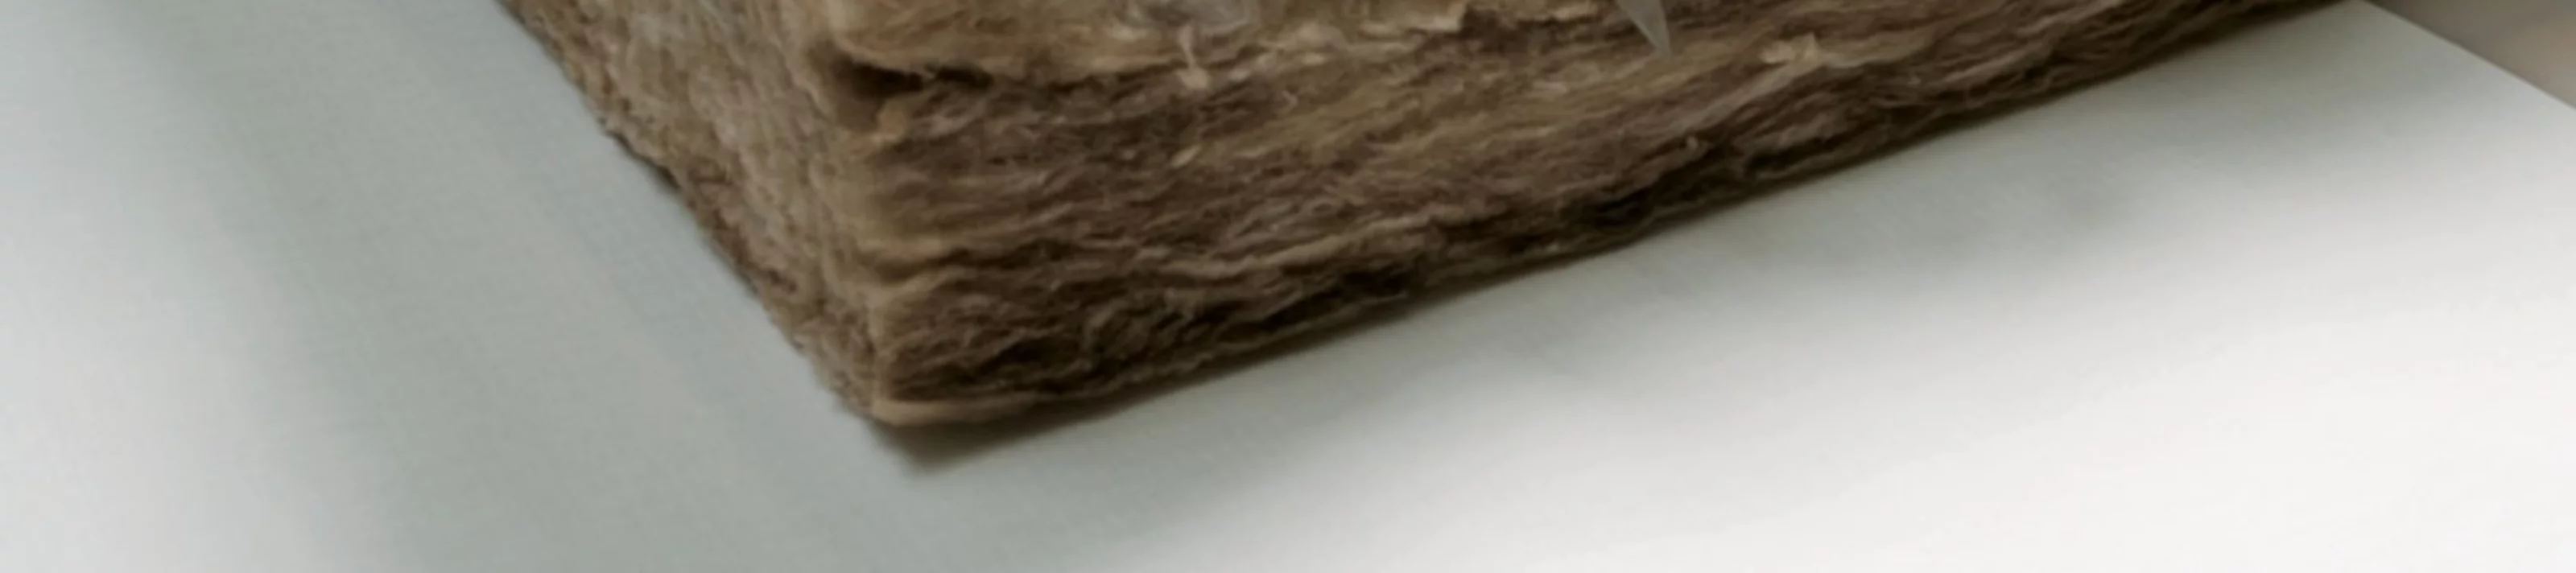 Knauf Insulation Glass Mineral Wool Cutting-Image-UK